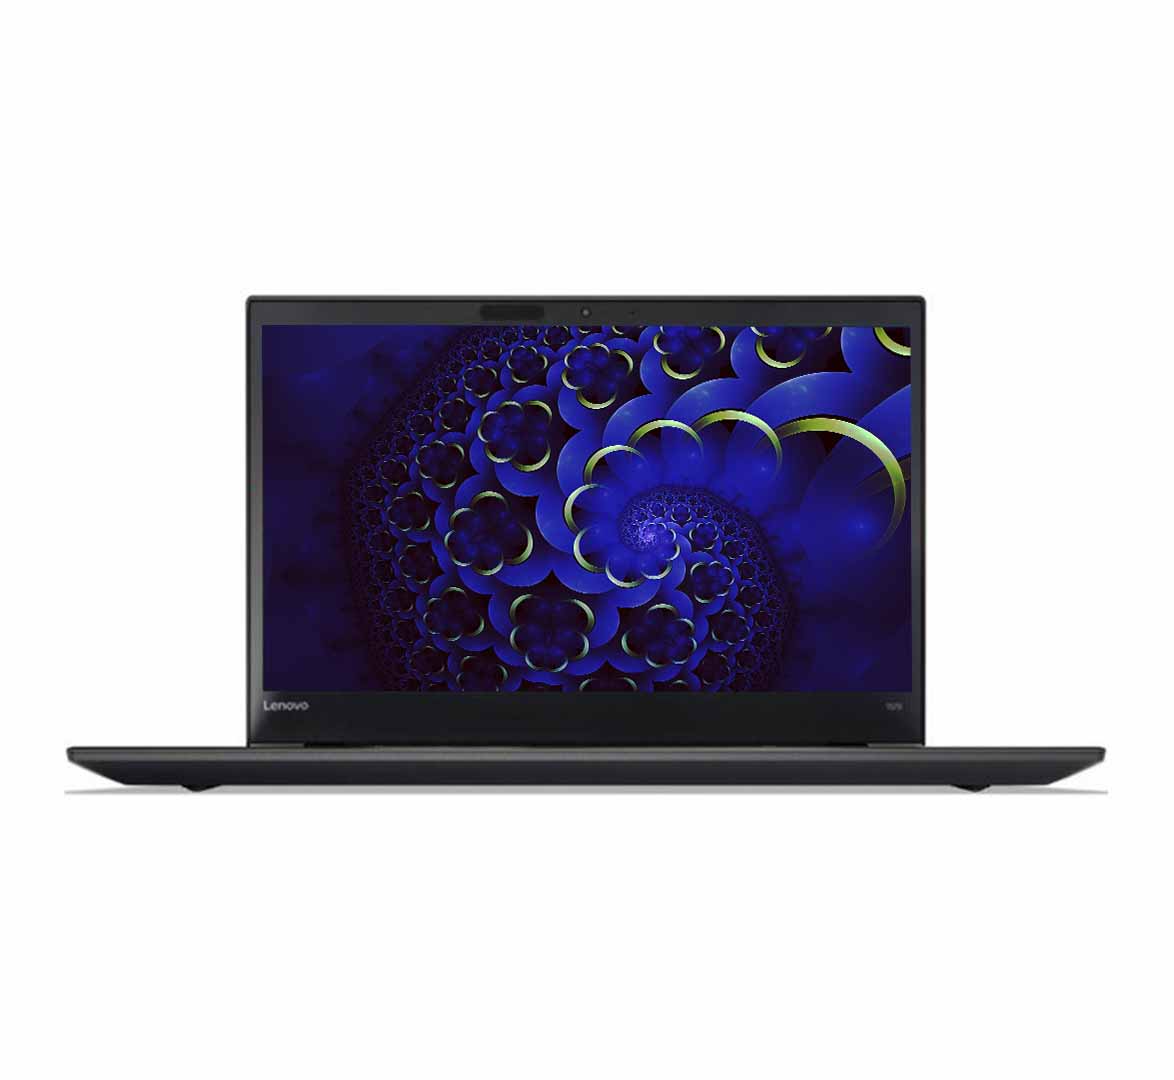 Lenovo ThinkPad T570 Business Laptop, Intel Core i7-7th Gen CPU, 16GB RAM, 512GB SSD, 15 inch Display, Windows 10 Pro